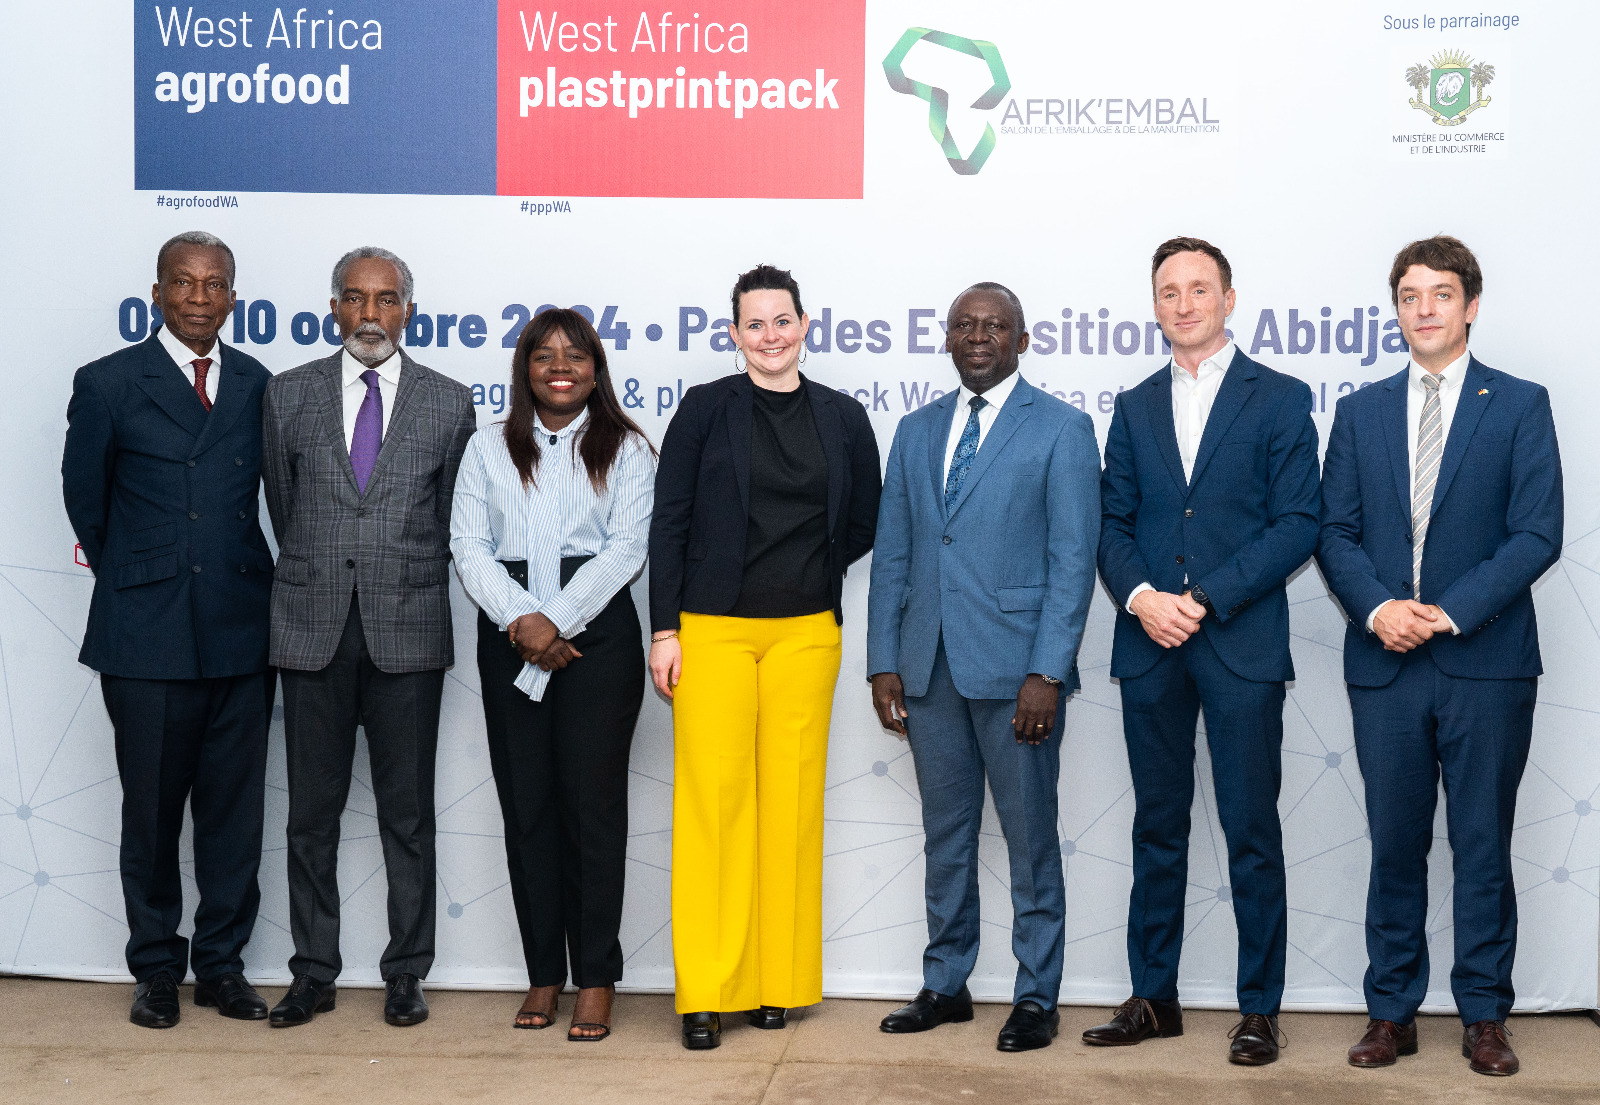 Abidjan accueille le salon Agrofood et plastprintpack West Africa